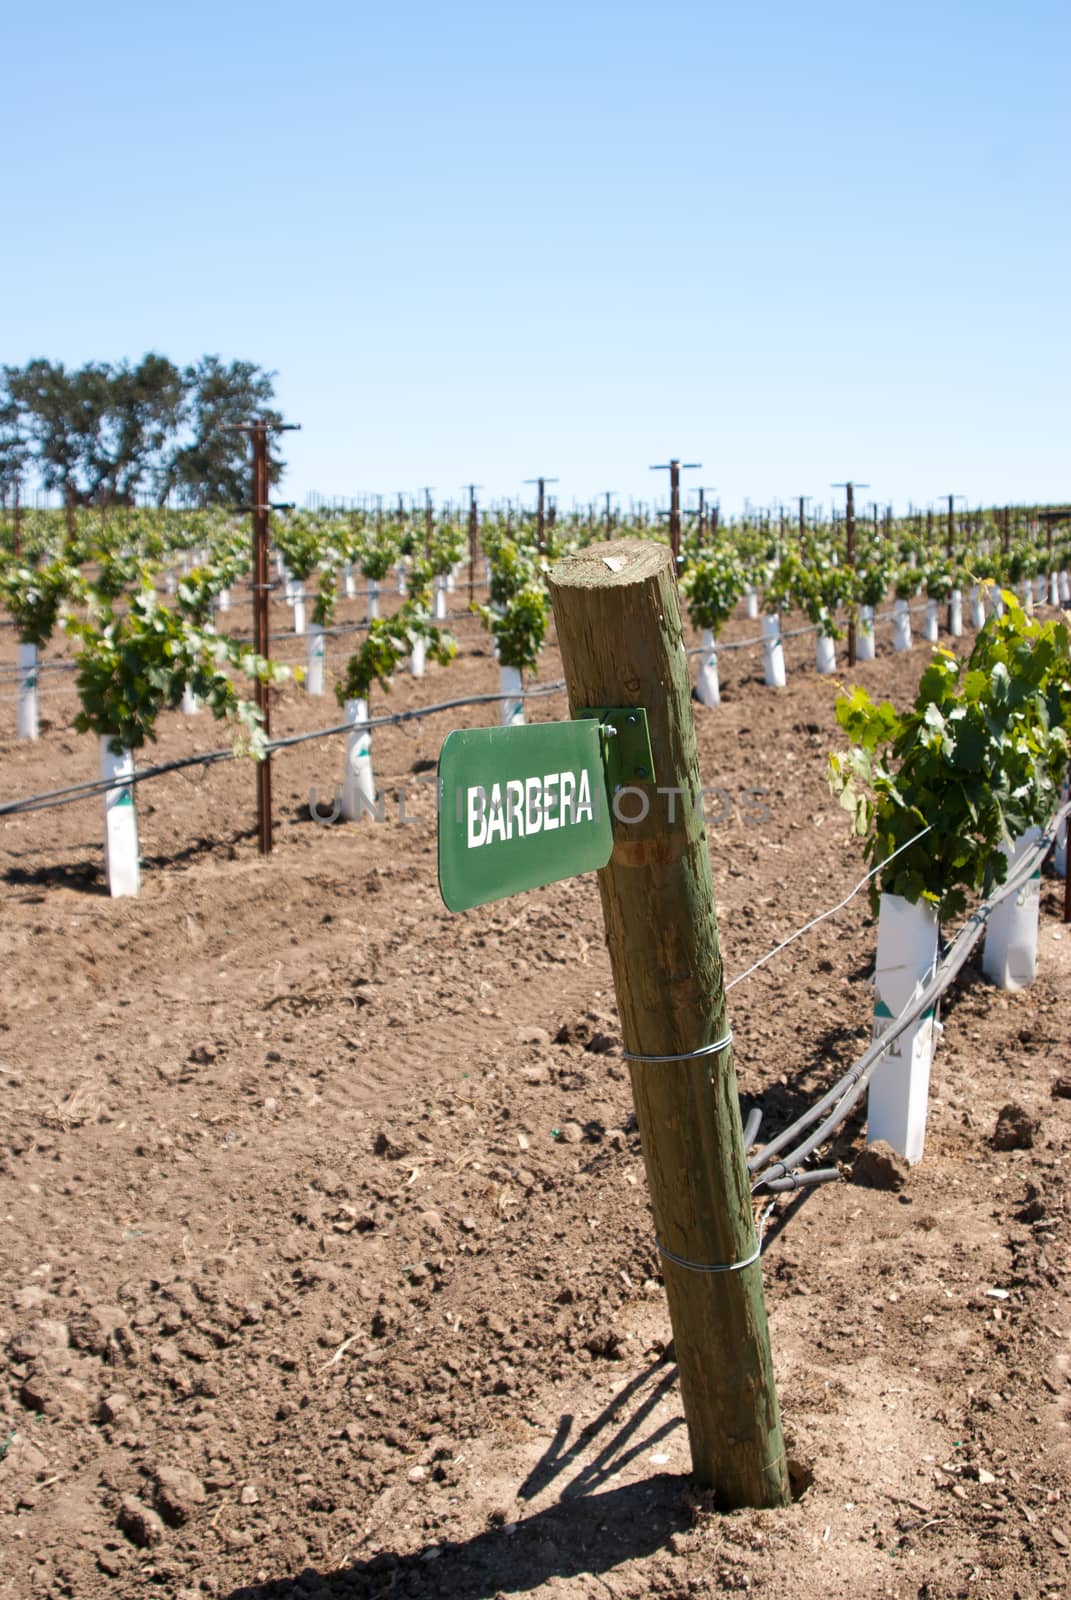 Sign for Barbera grape in California vineyard by emattil